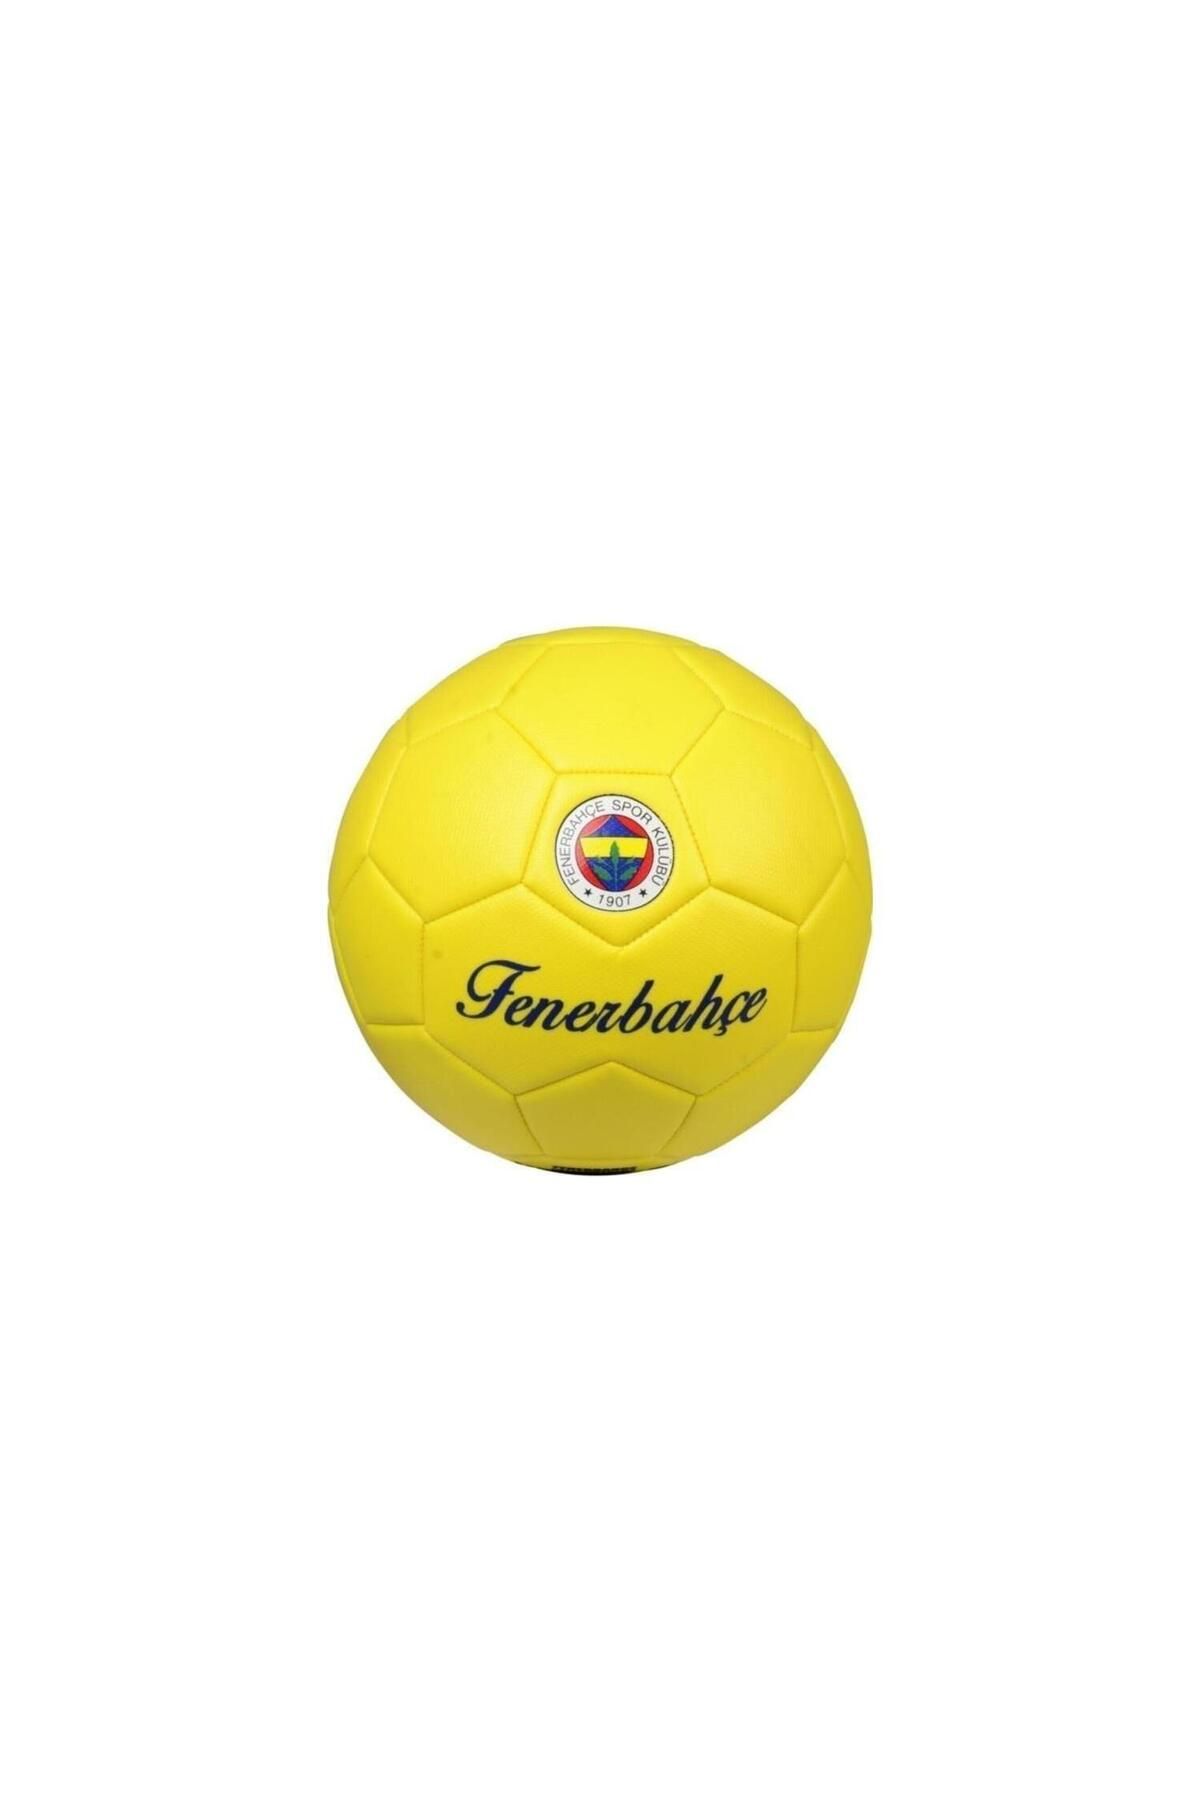 Fenerbahçe Futbol Topu Fenerbahçe Premium No:5 Sarı